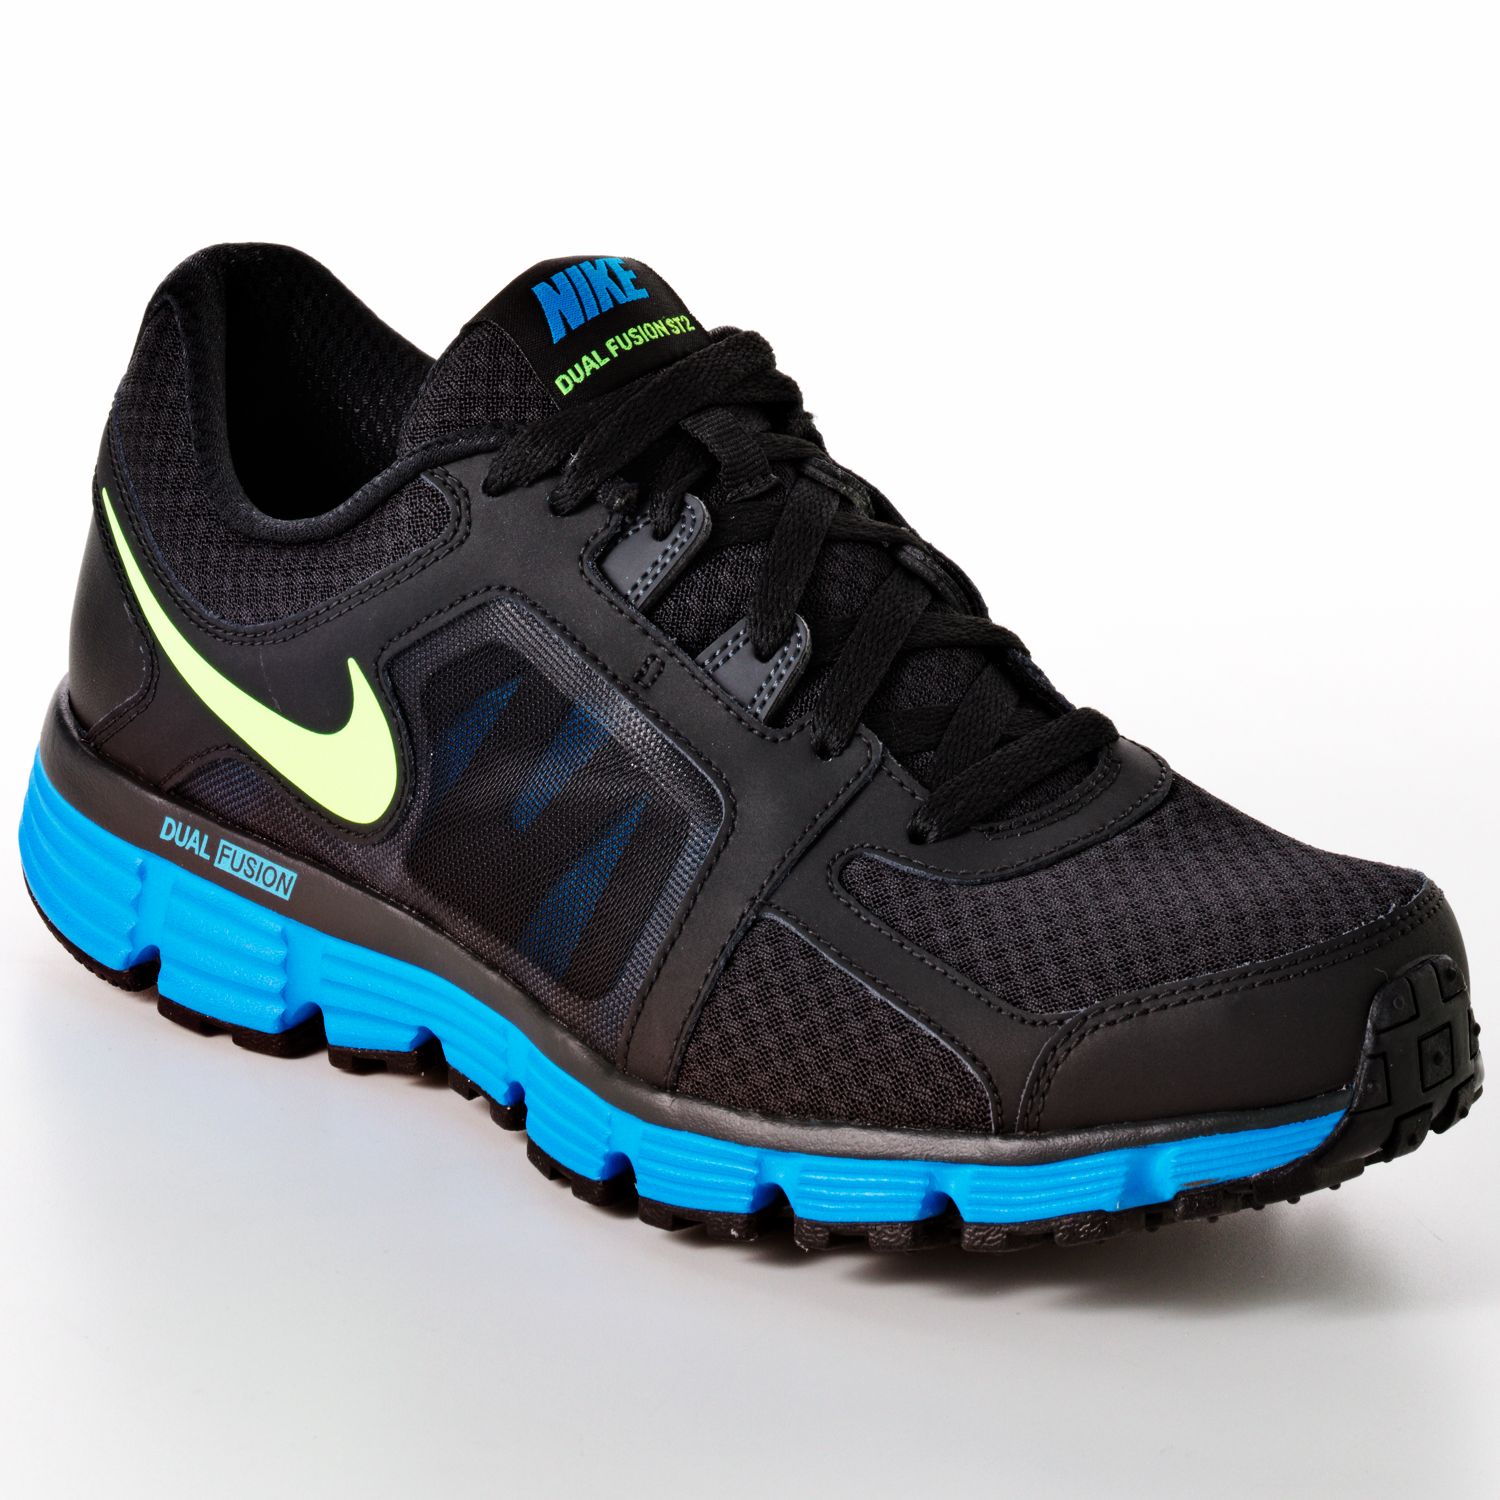 Nike Dual Fusion ST 2 Running Shoes - Men